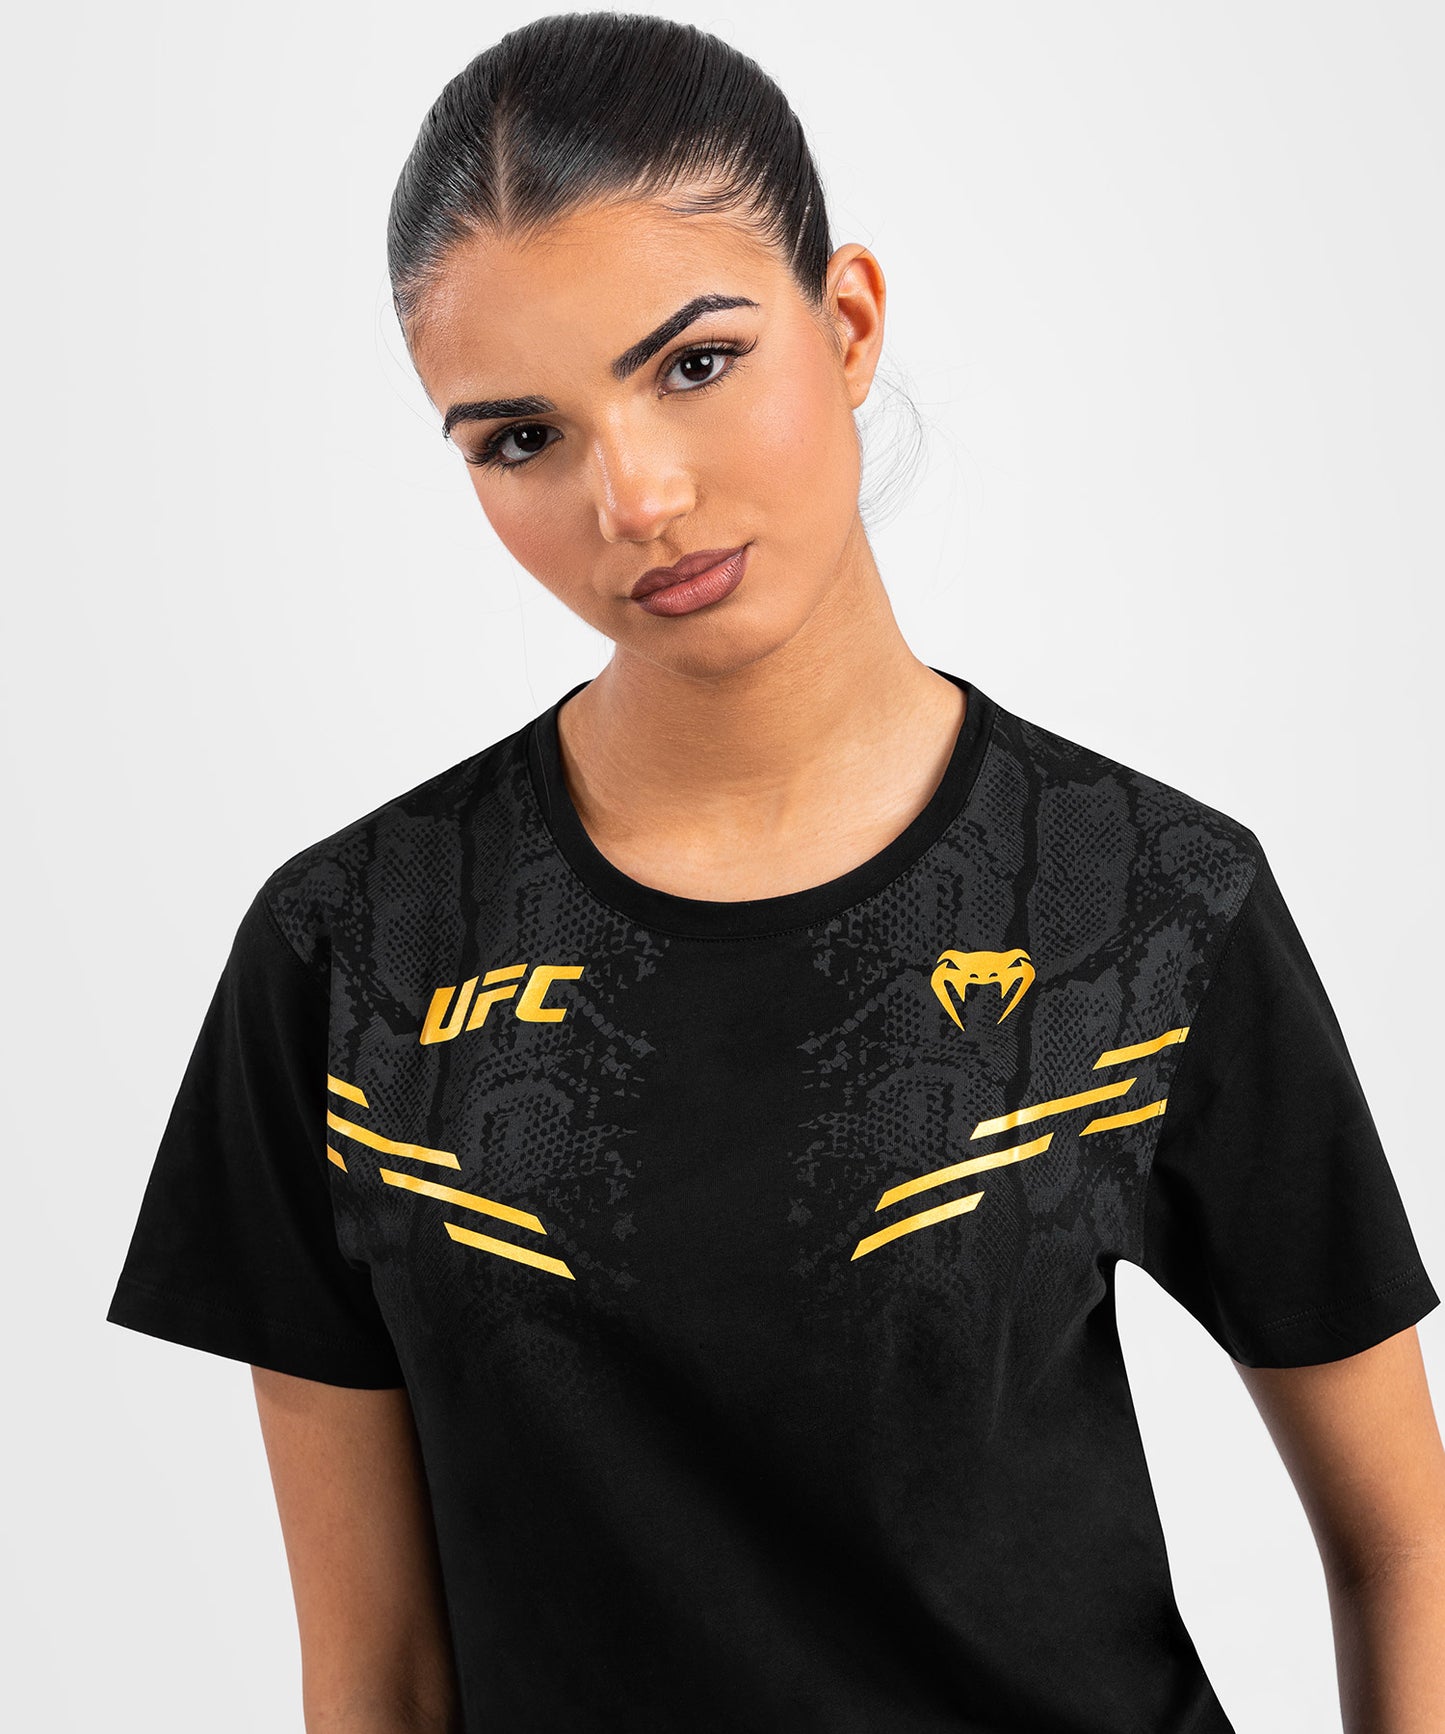 UFC Adrenaline by Venum Replica Women’s Short-sleeve T-shirt - Champion